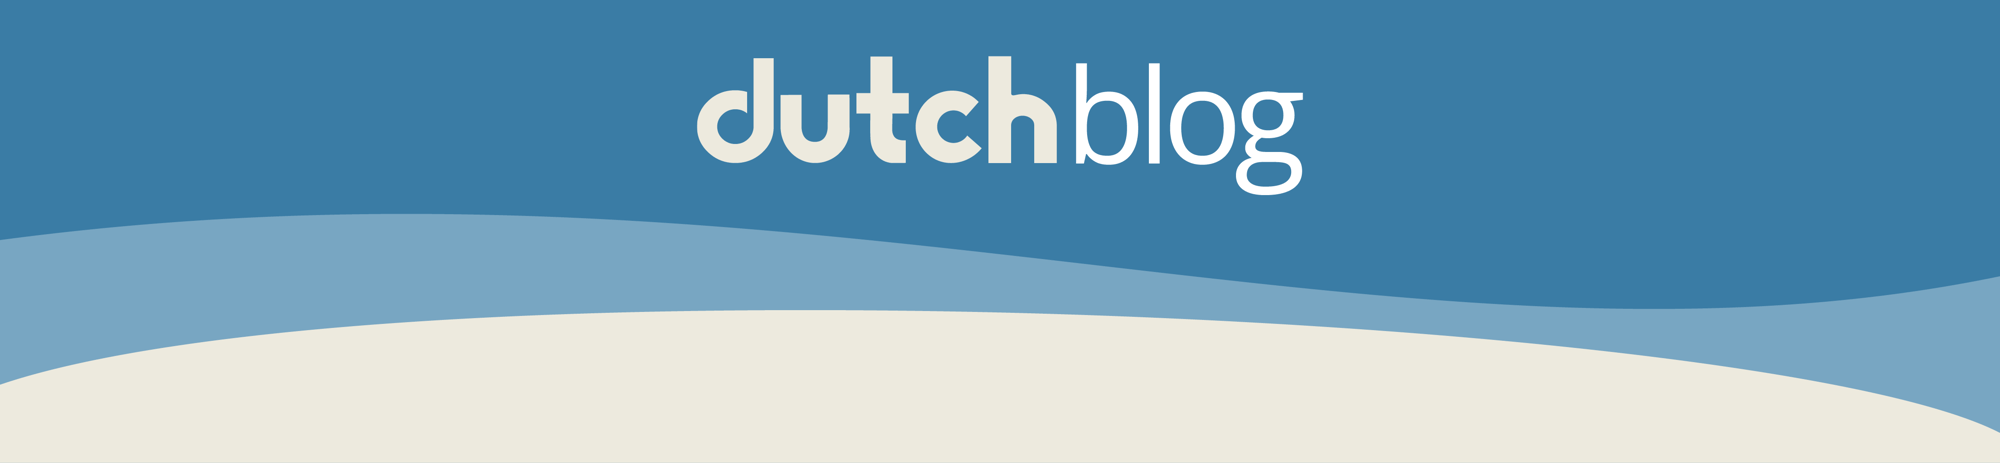 DUTCH Digest_Header Swoopies_Blog-1